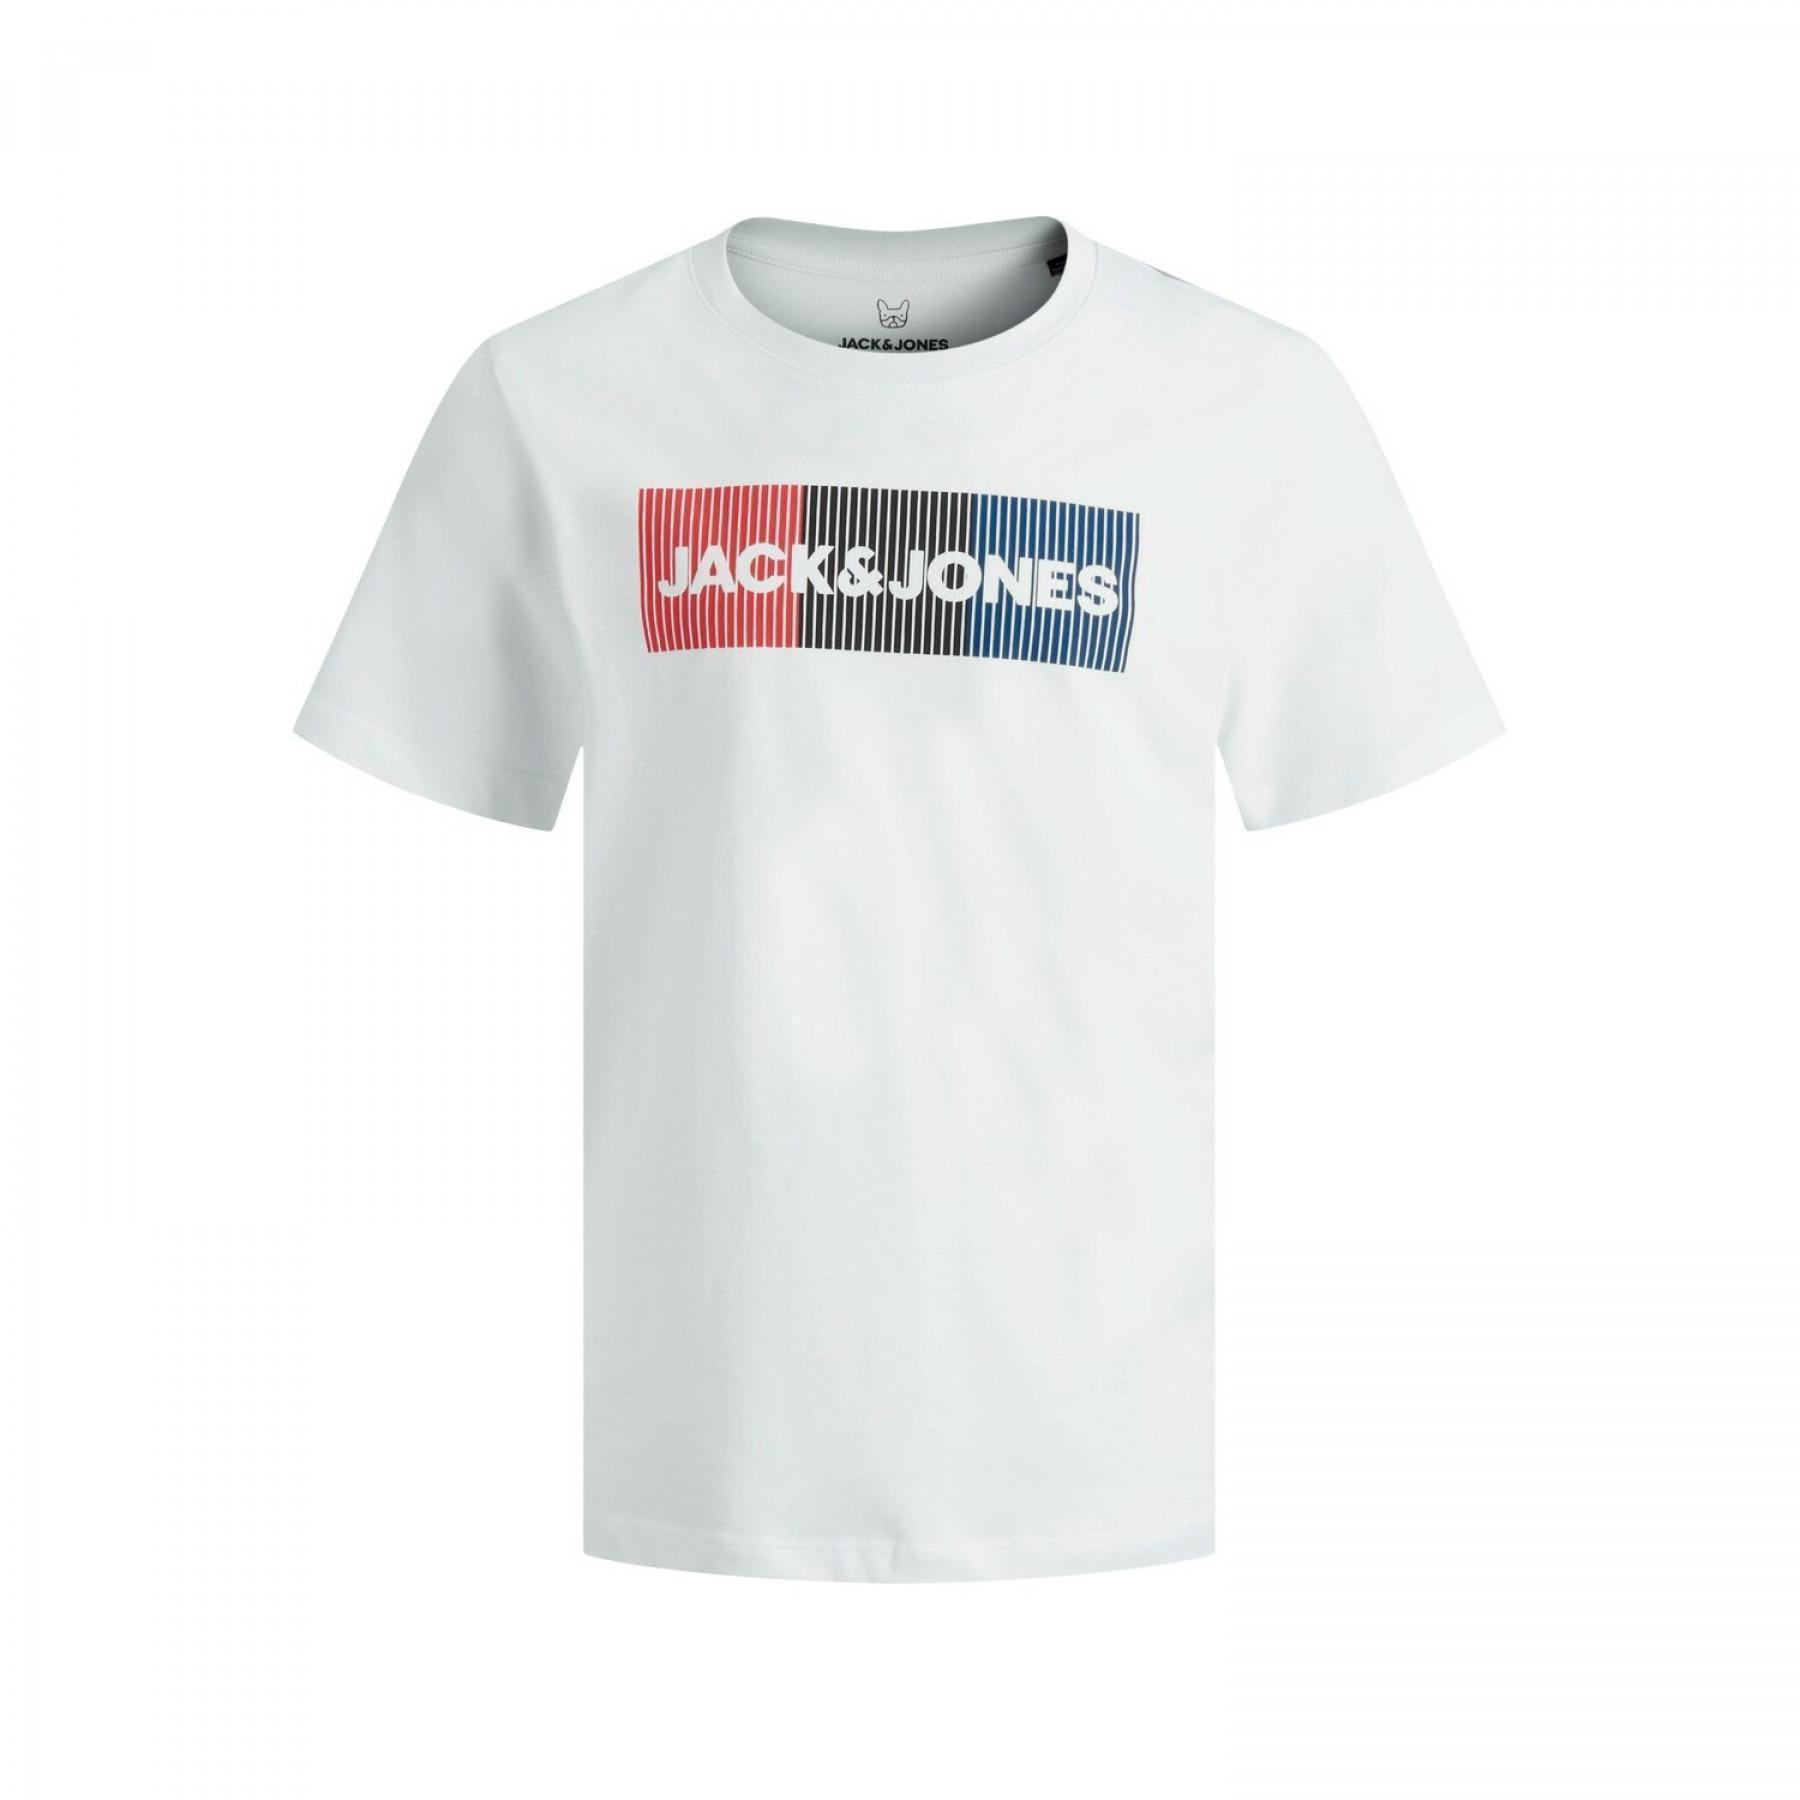 Child's T-shirt Jack & Jones Ecorp